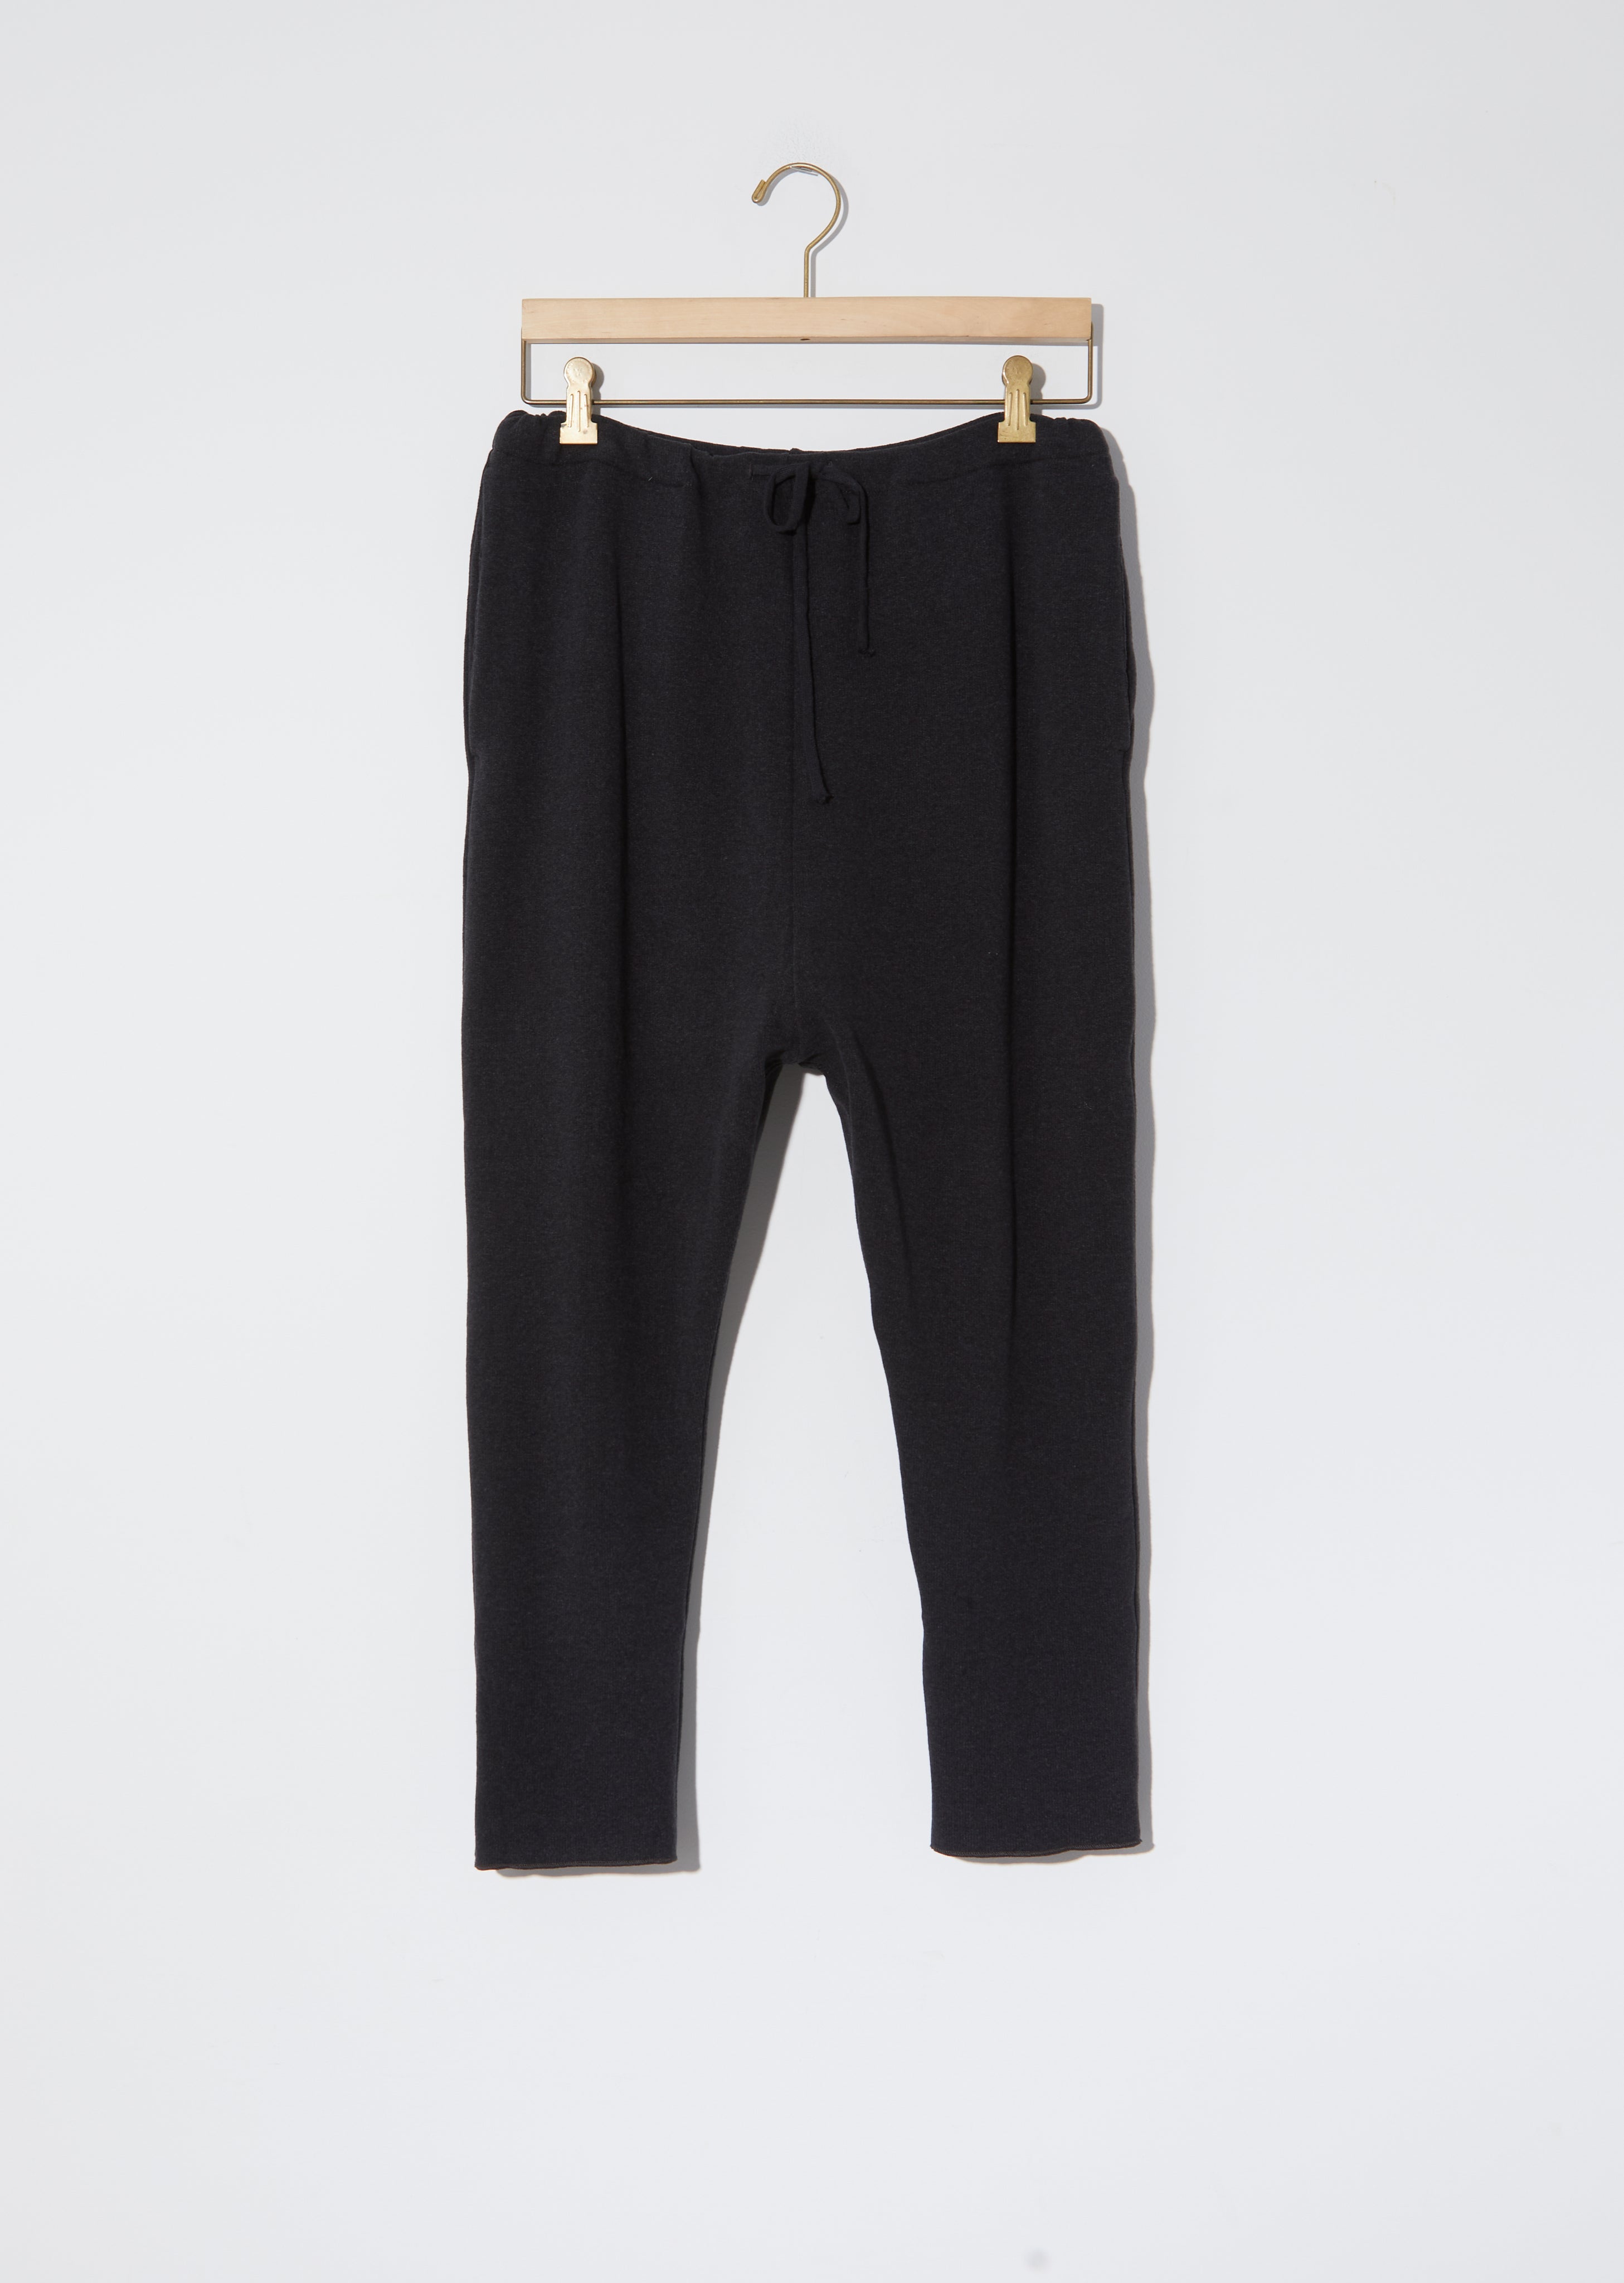 New Basic Pantalone - X-Small / Almost Black